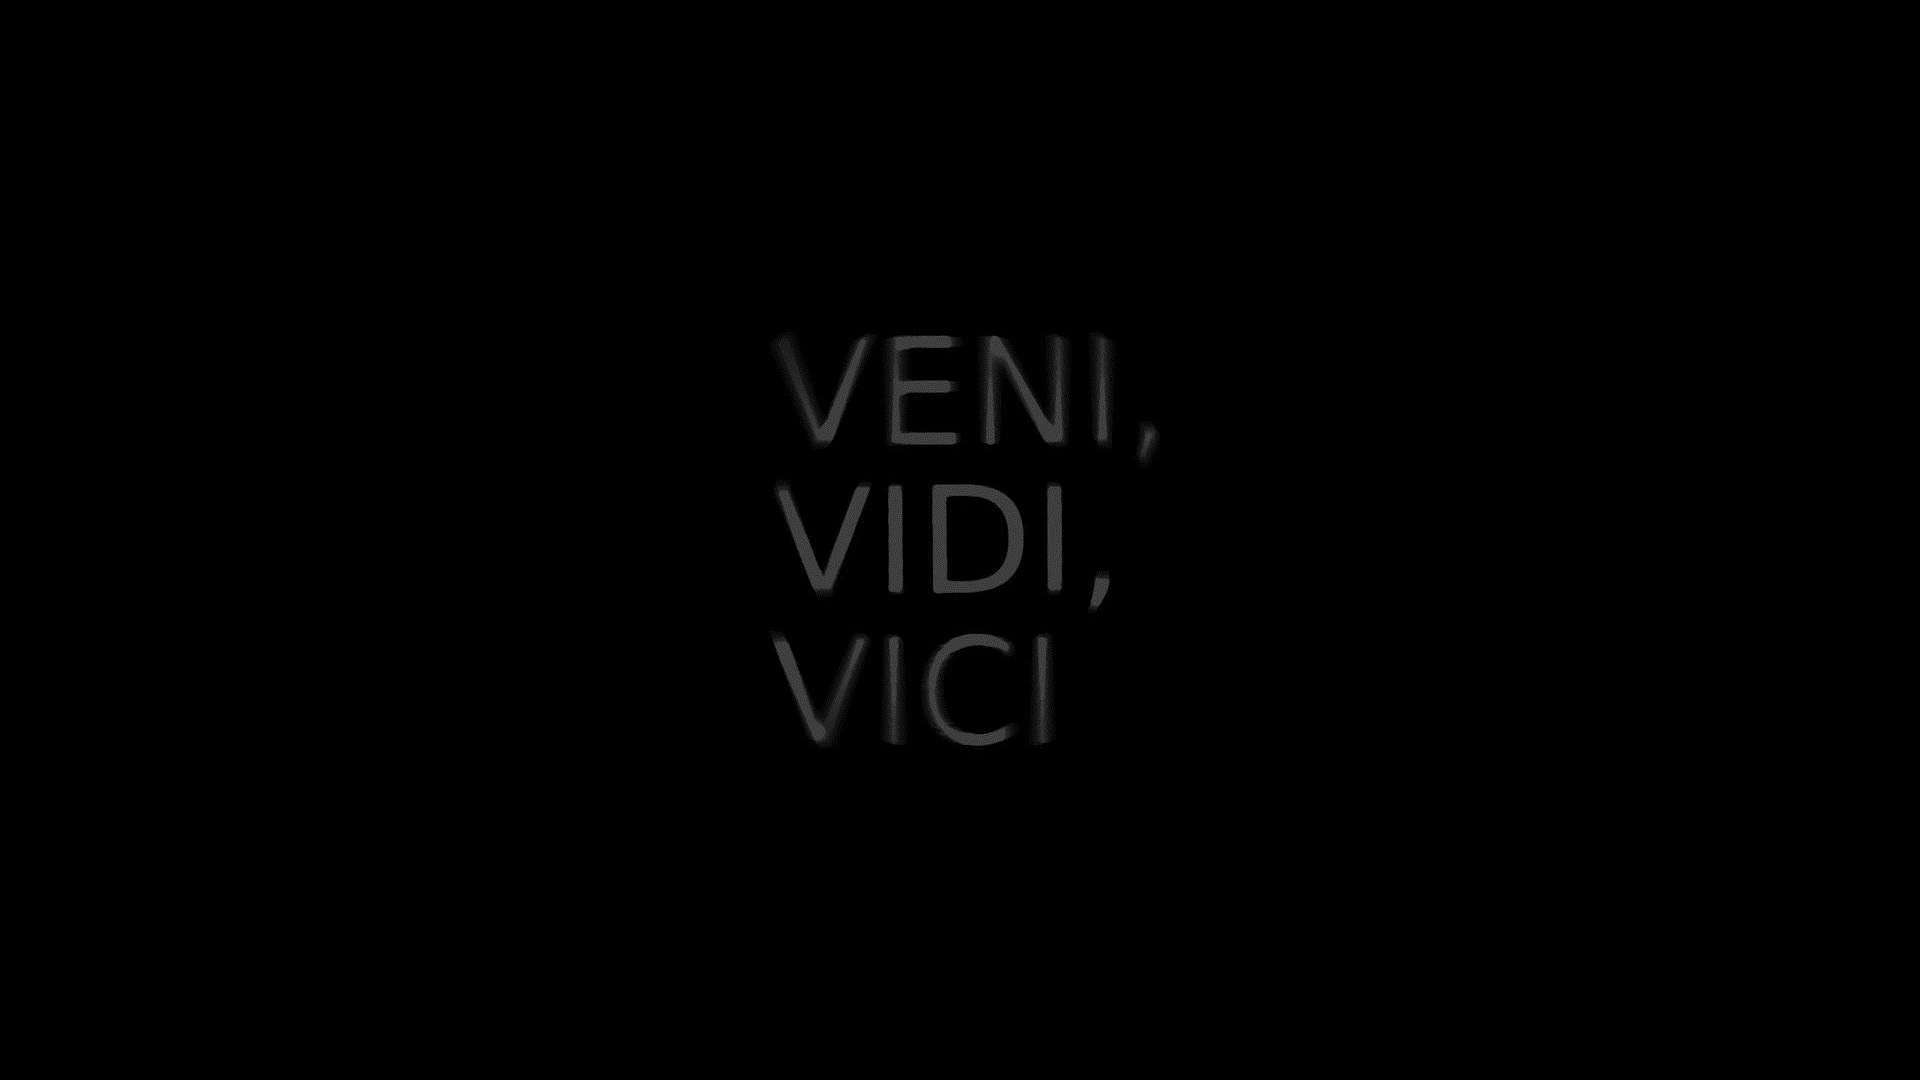 Veni Vidi Vici HD Wallpaper FullHDwpp Full